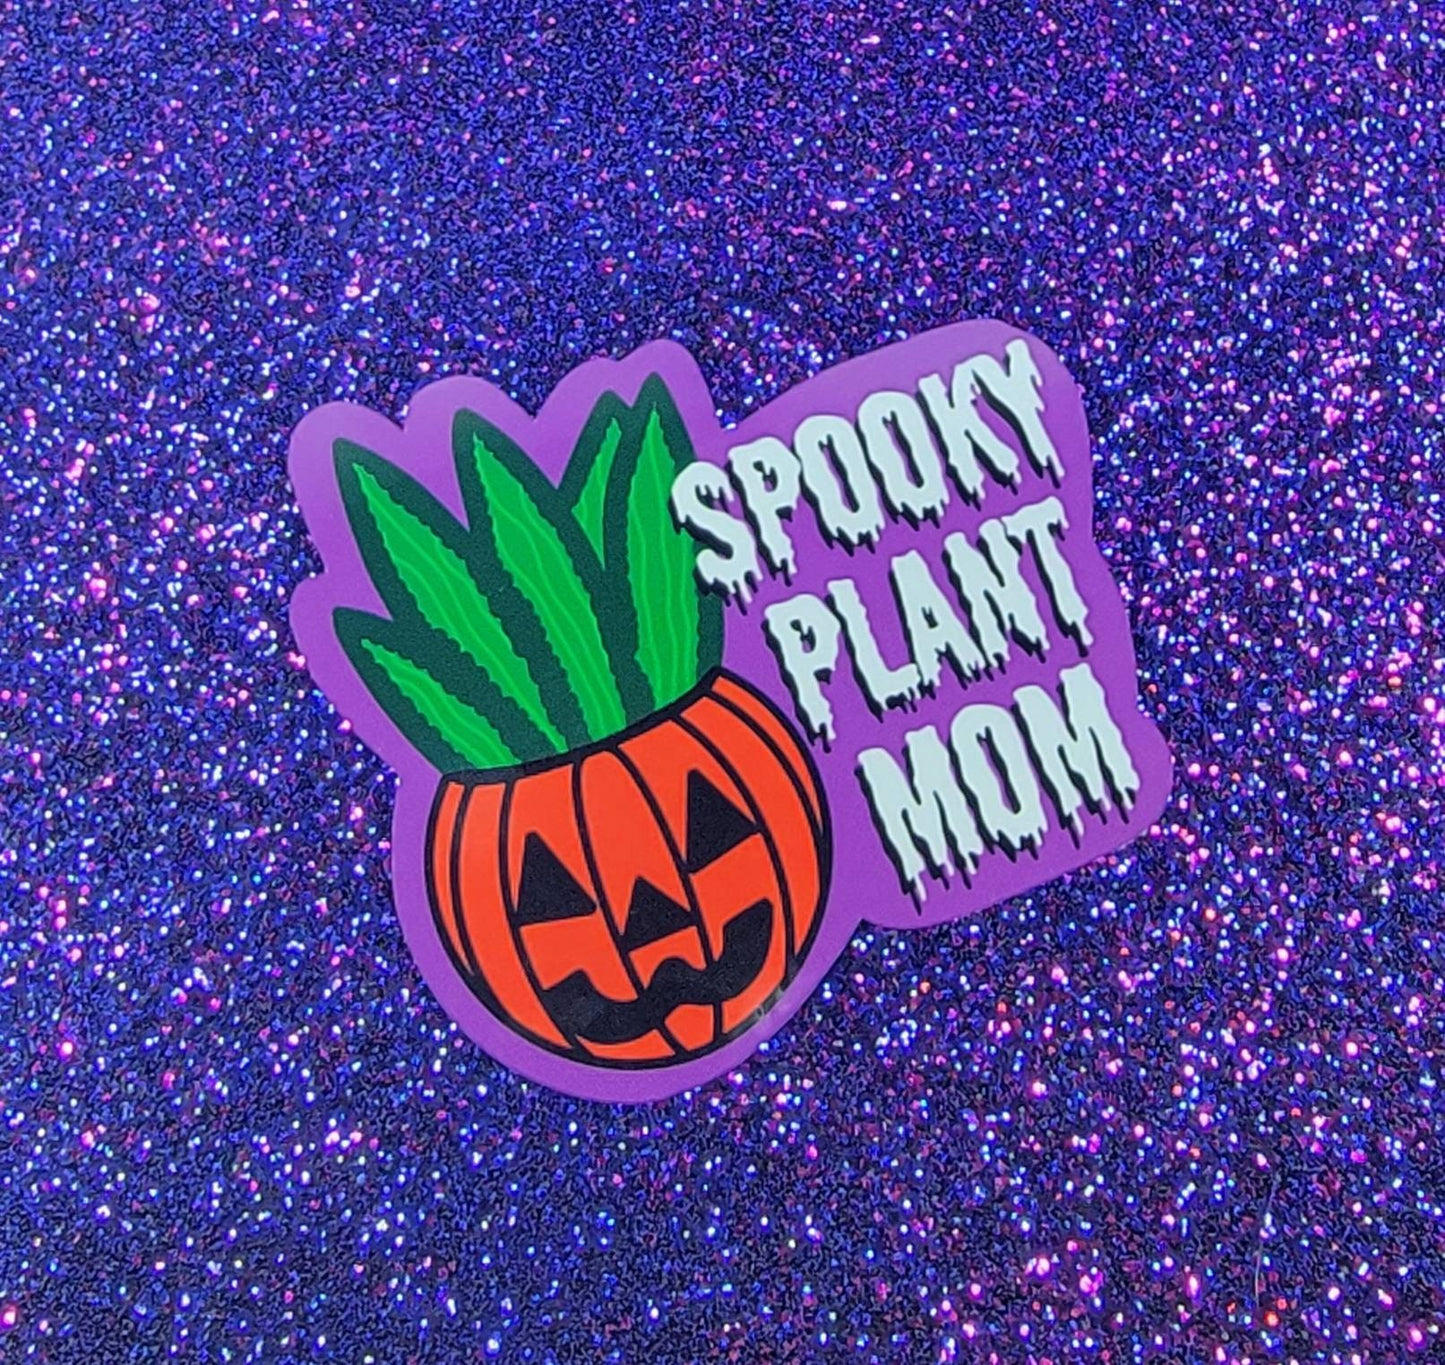 Spooky Plant Mom Sticker 2.75"x3"